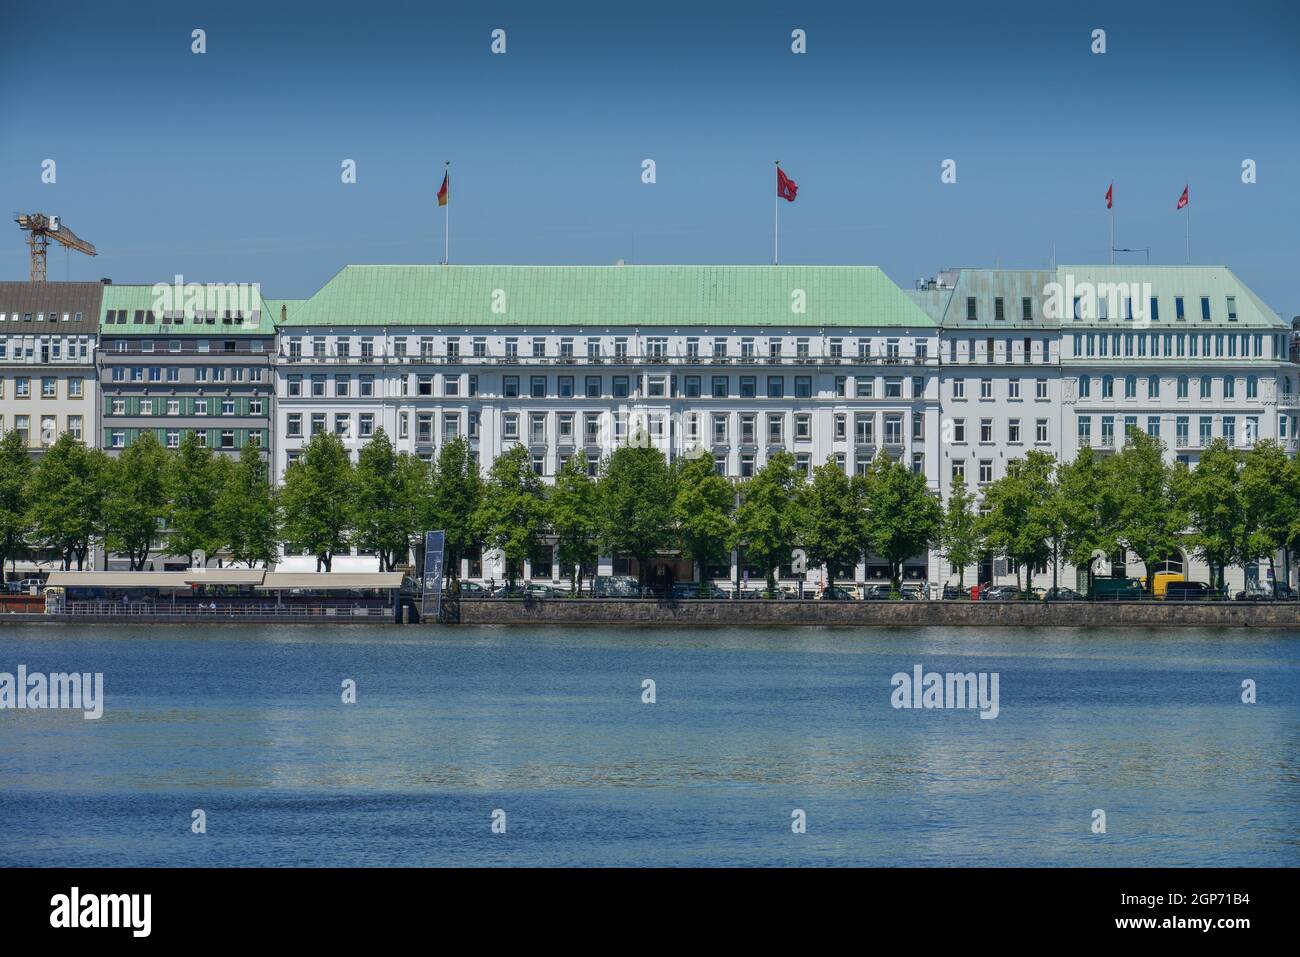 Hotel Vier Jahreszeiten, Inner Alster Lake, Hamburg, Germany Stock Photo